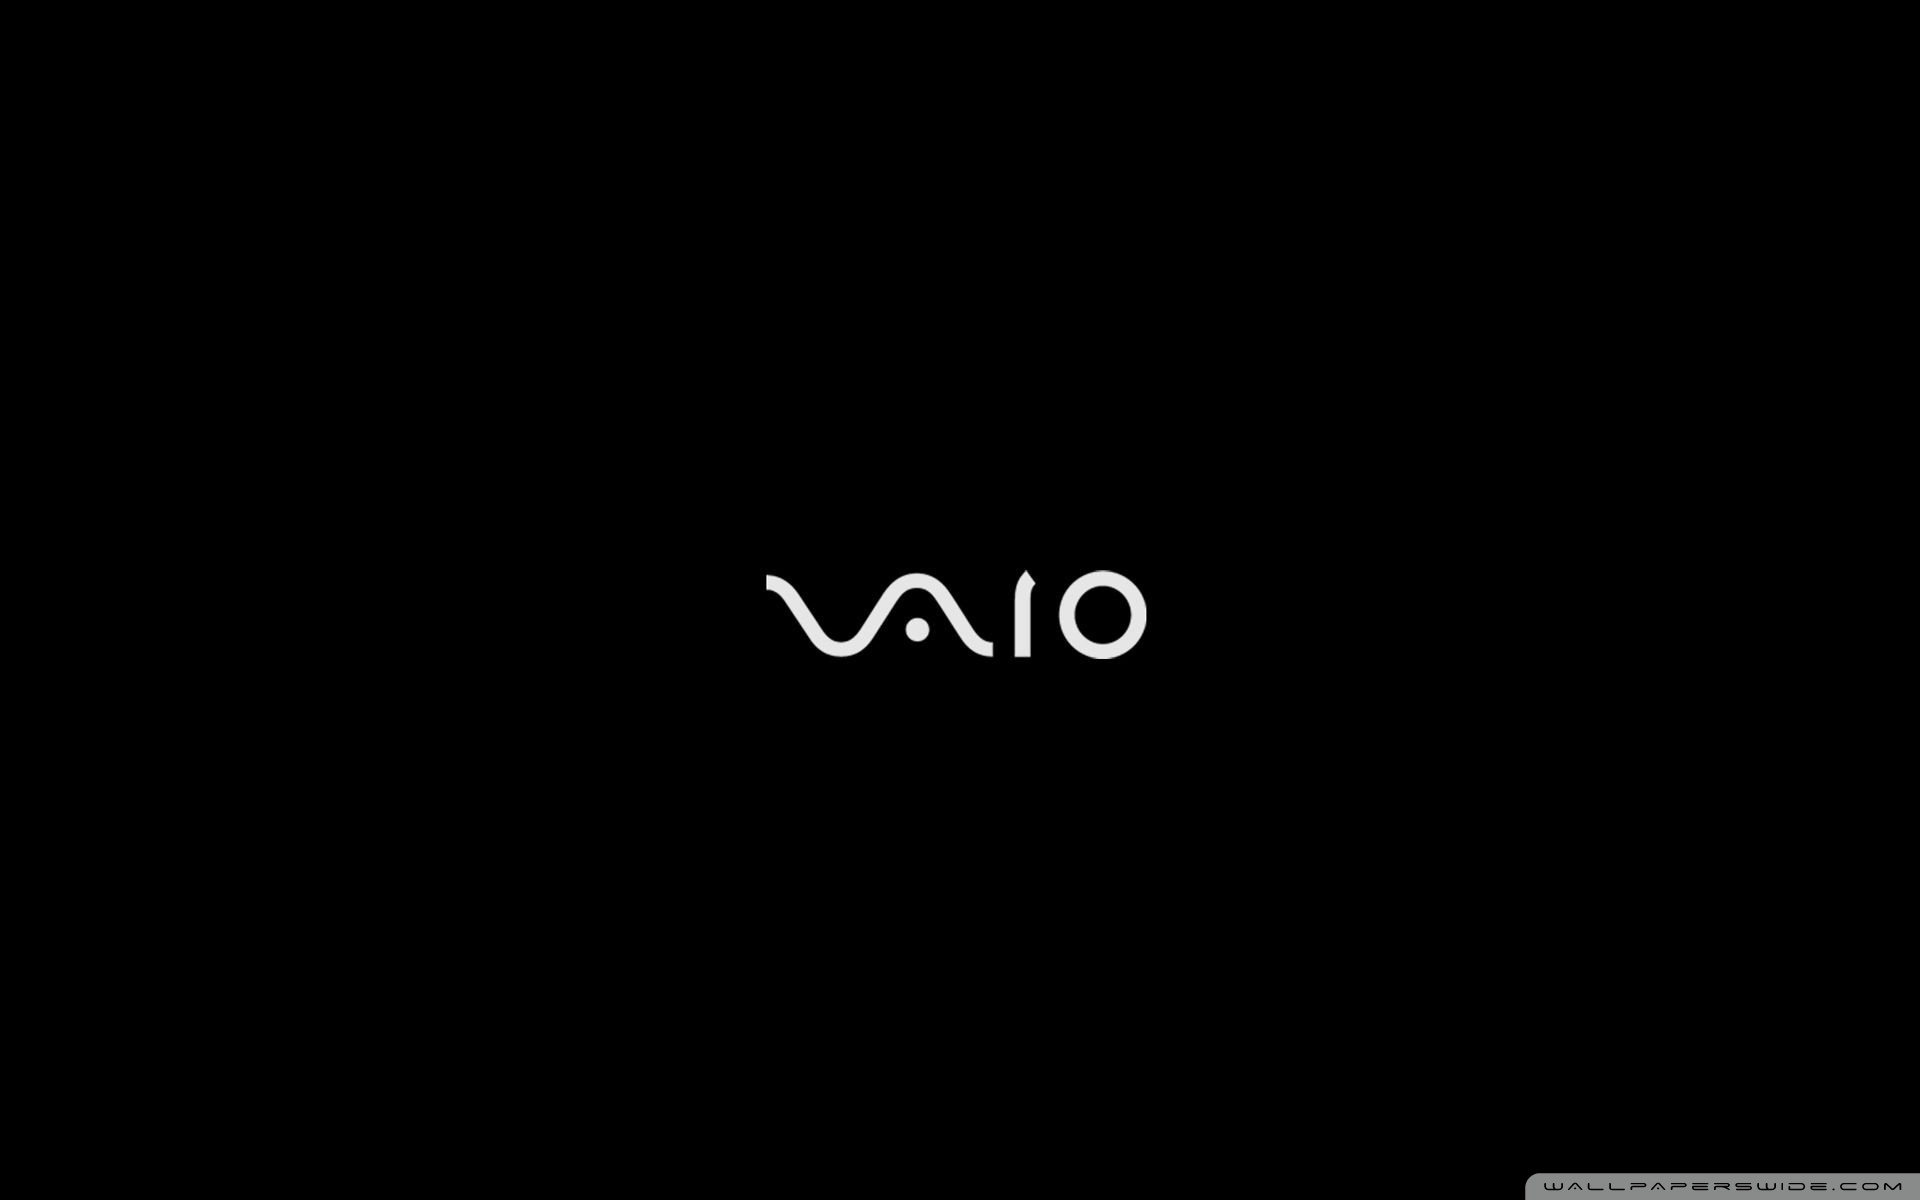 Sony Vaio Wallpaper Full HD 1080p